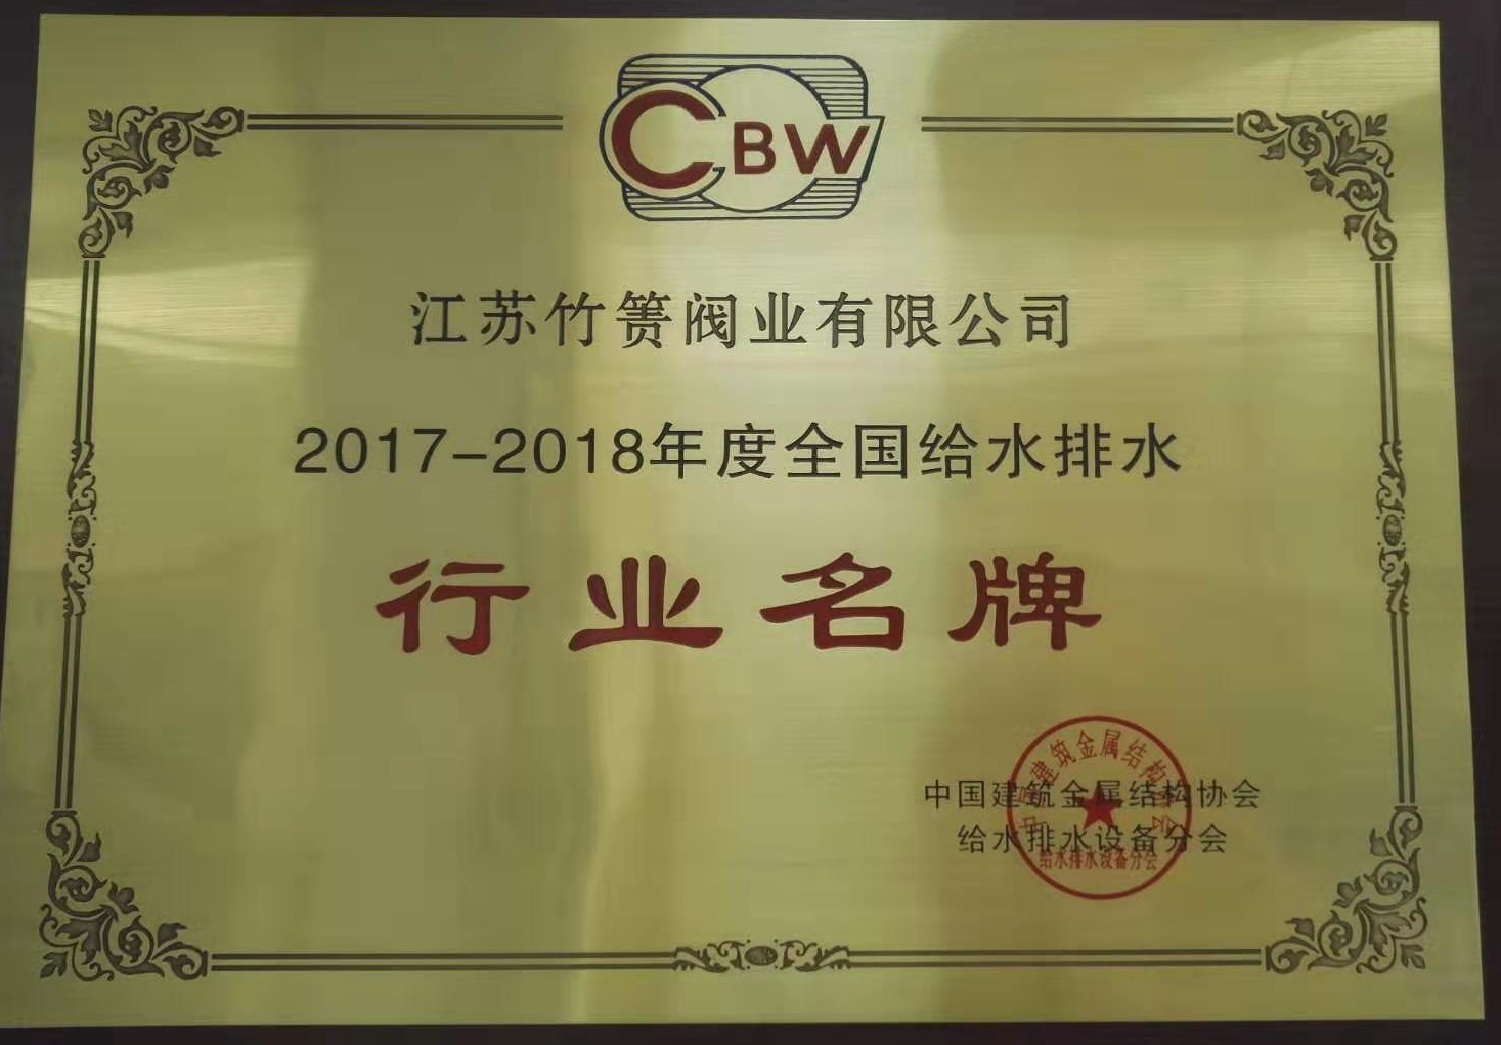 Zhuqi Valve Industry won the 